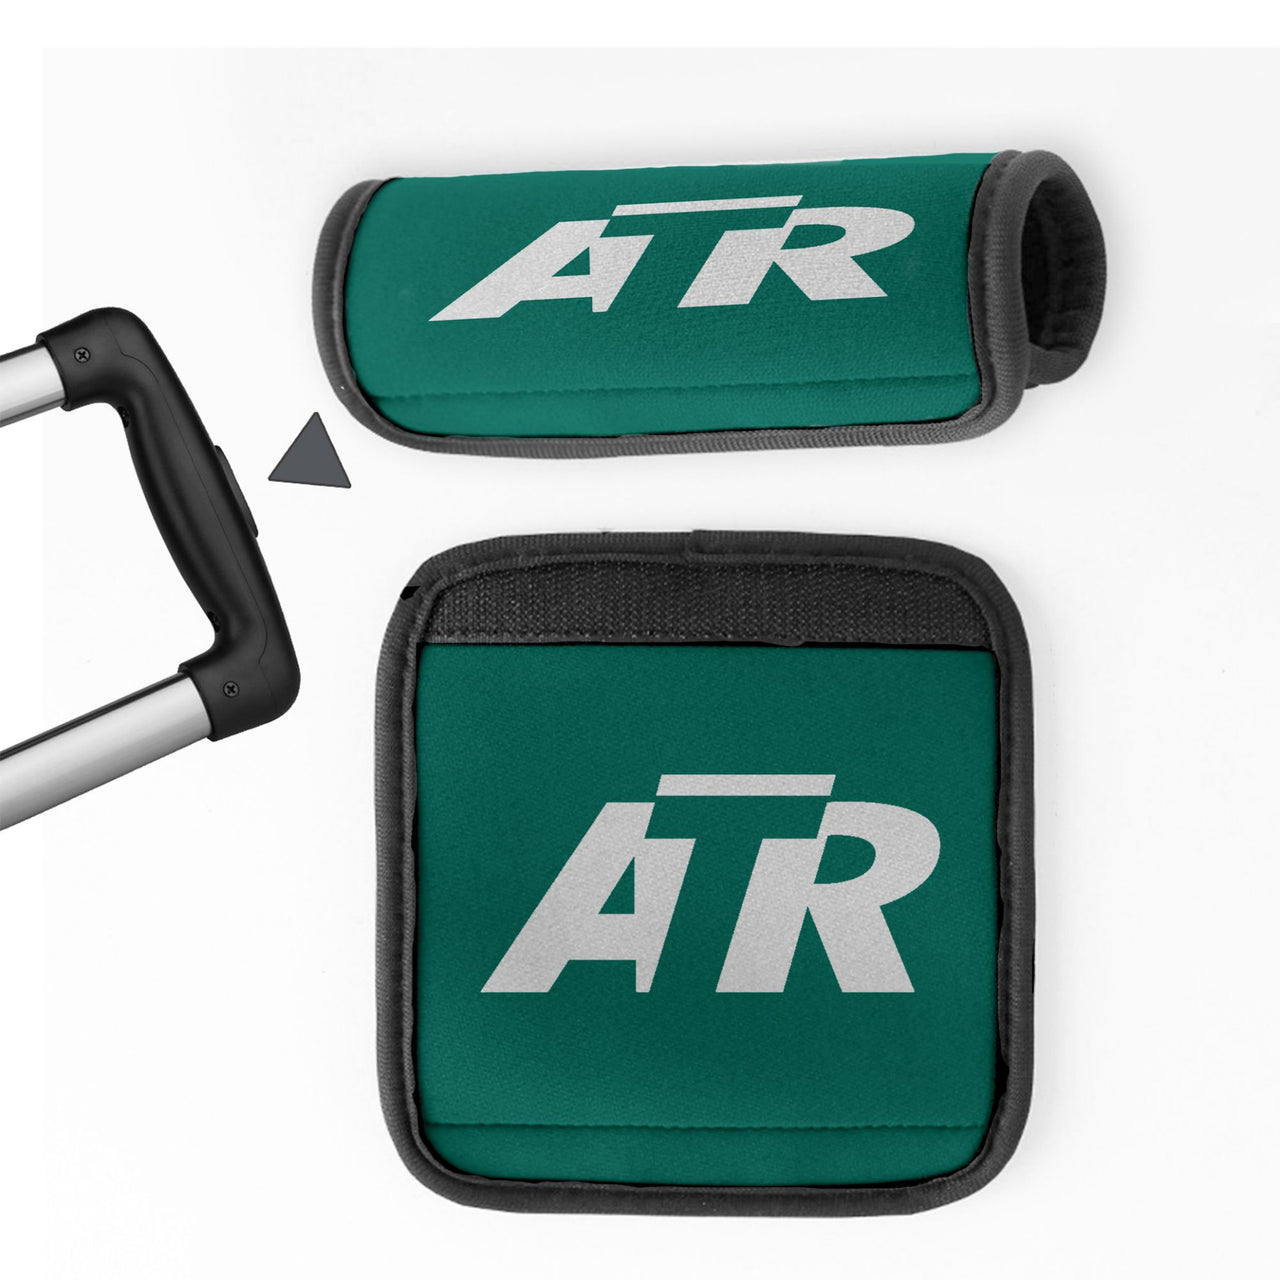 ATR & Text Designed Neoprene Luggage Handle Covers